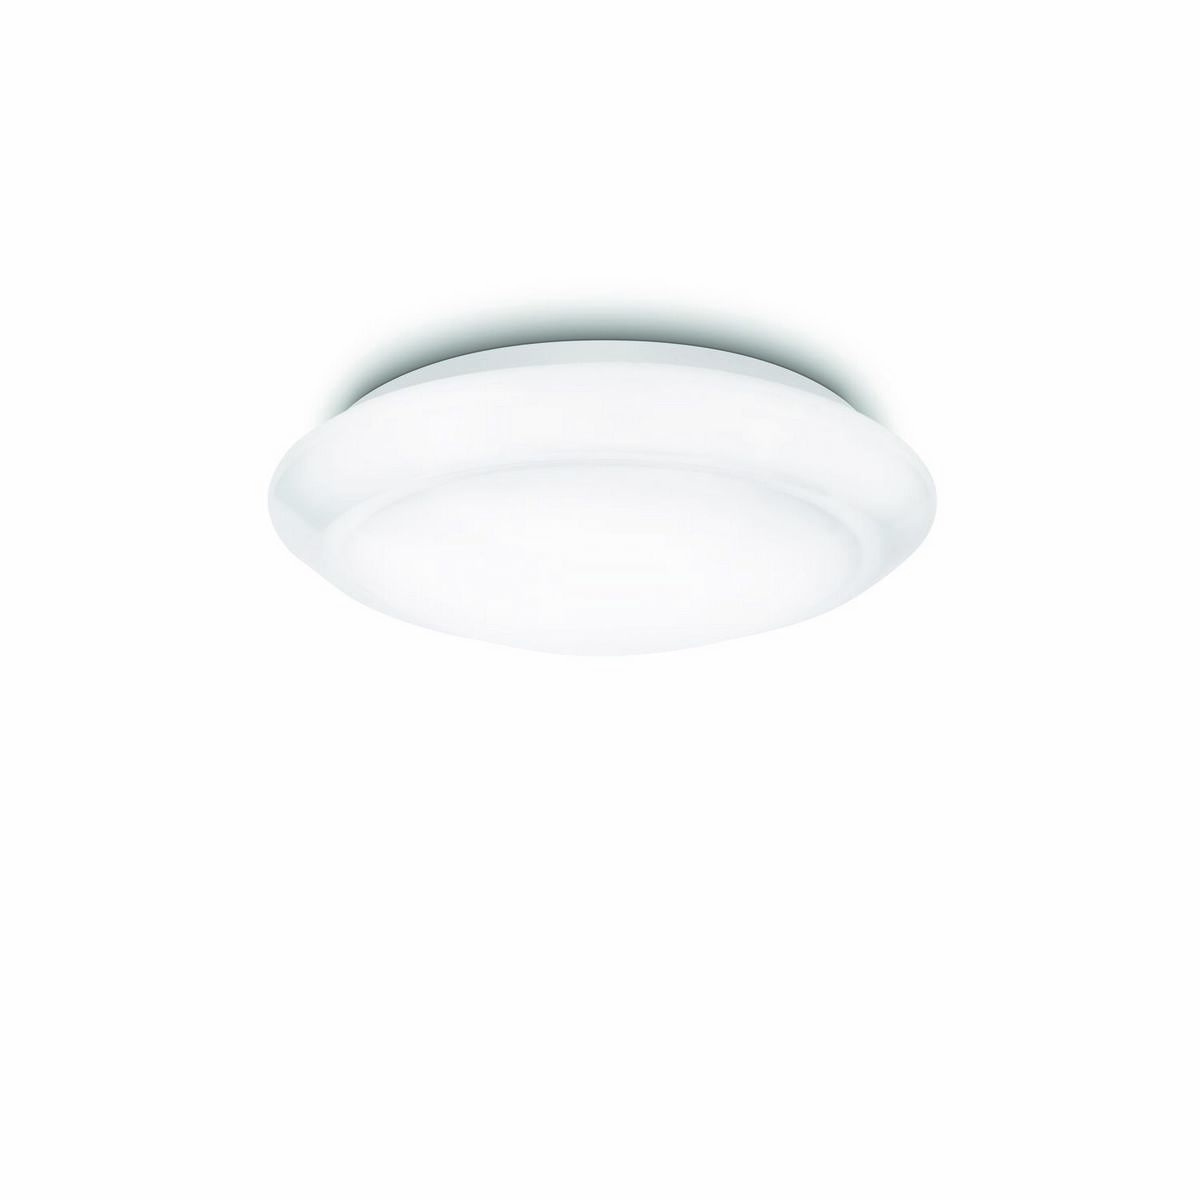 Philips 33361/31/17 Cinnabar LED mennyezeti lámpatest 1x 6 W 640LM 4000K IP20 25 cm, fehér